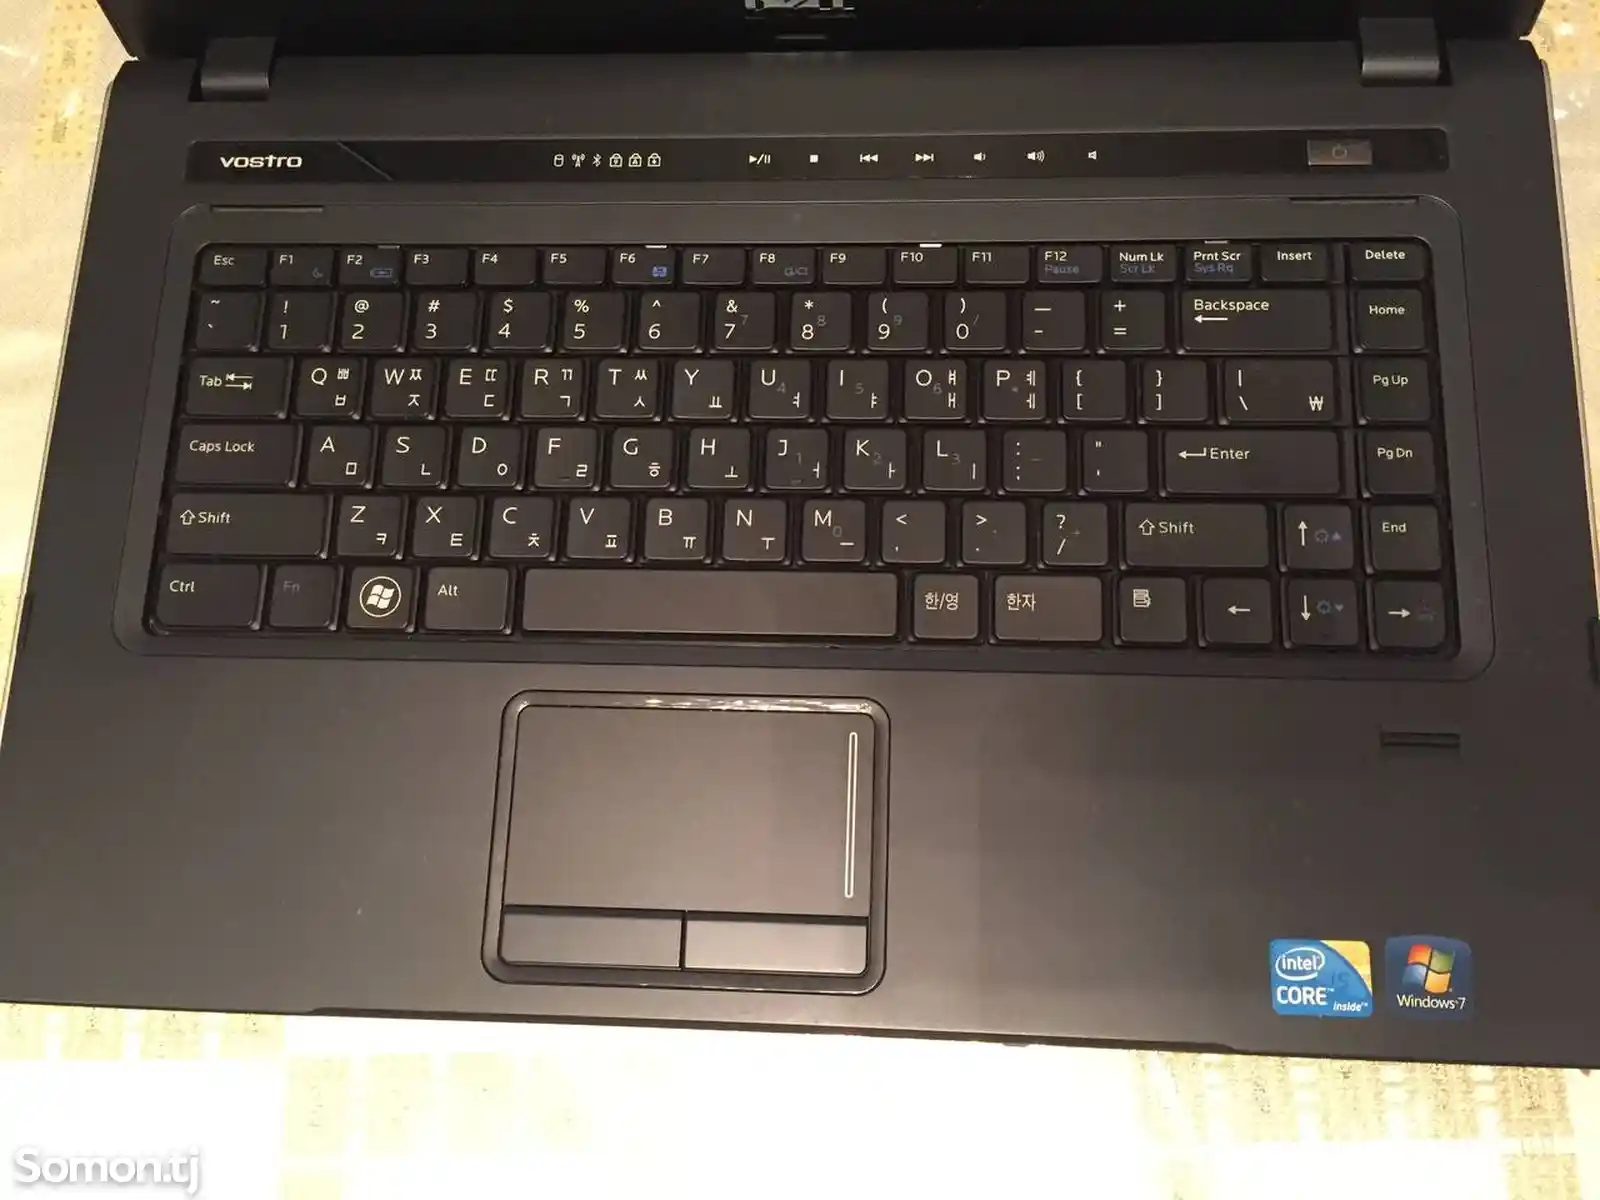 Ноутбук Dell-5